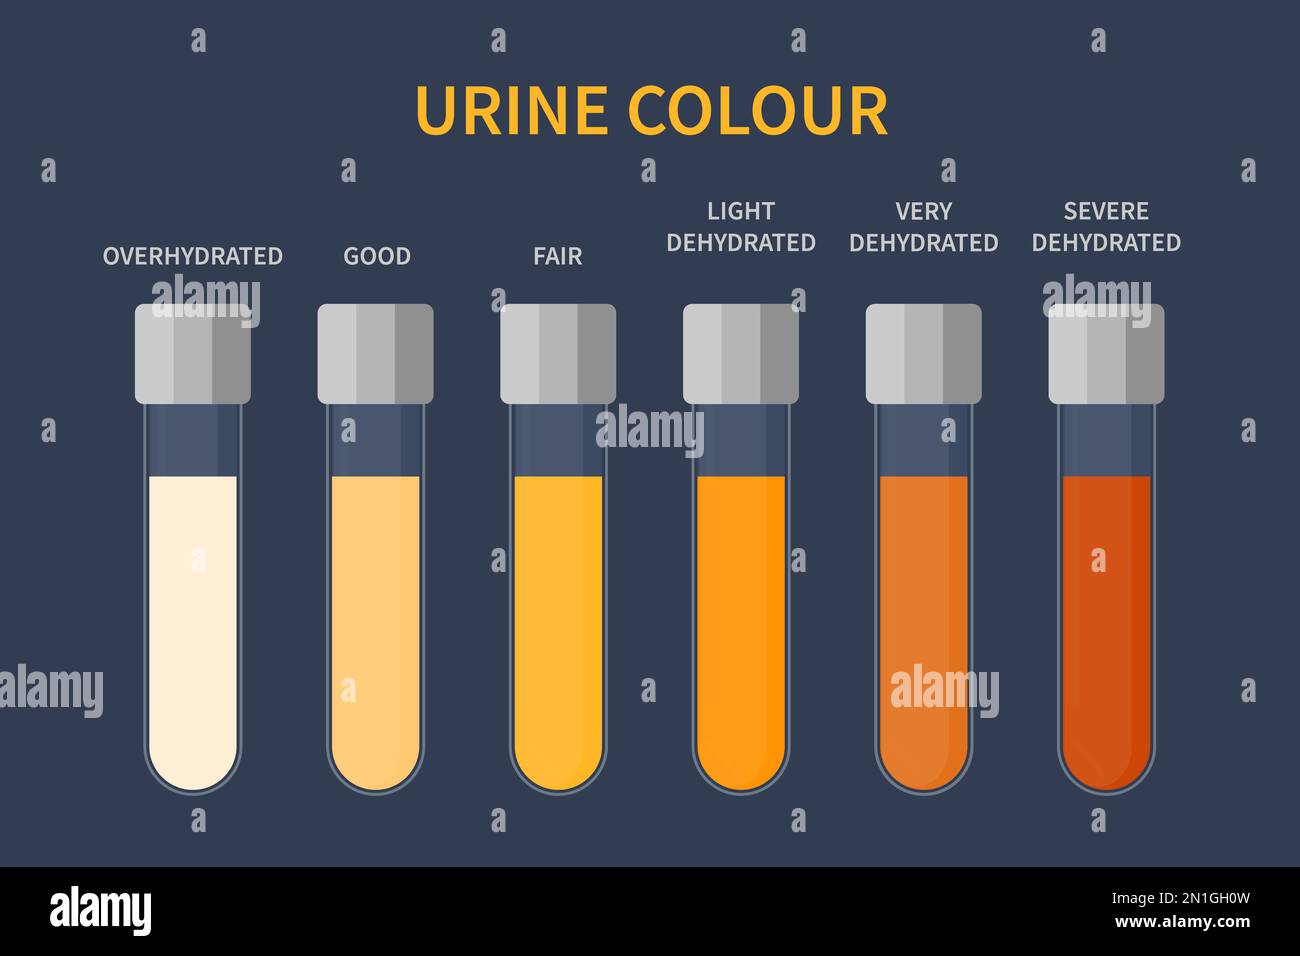 abnormal urine color